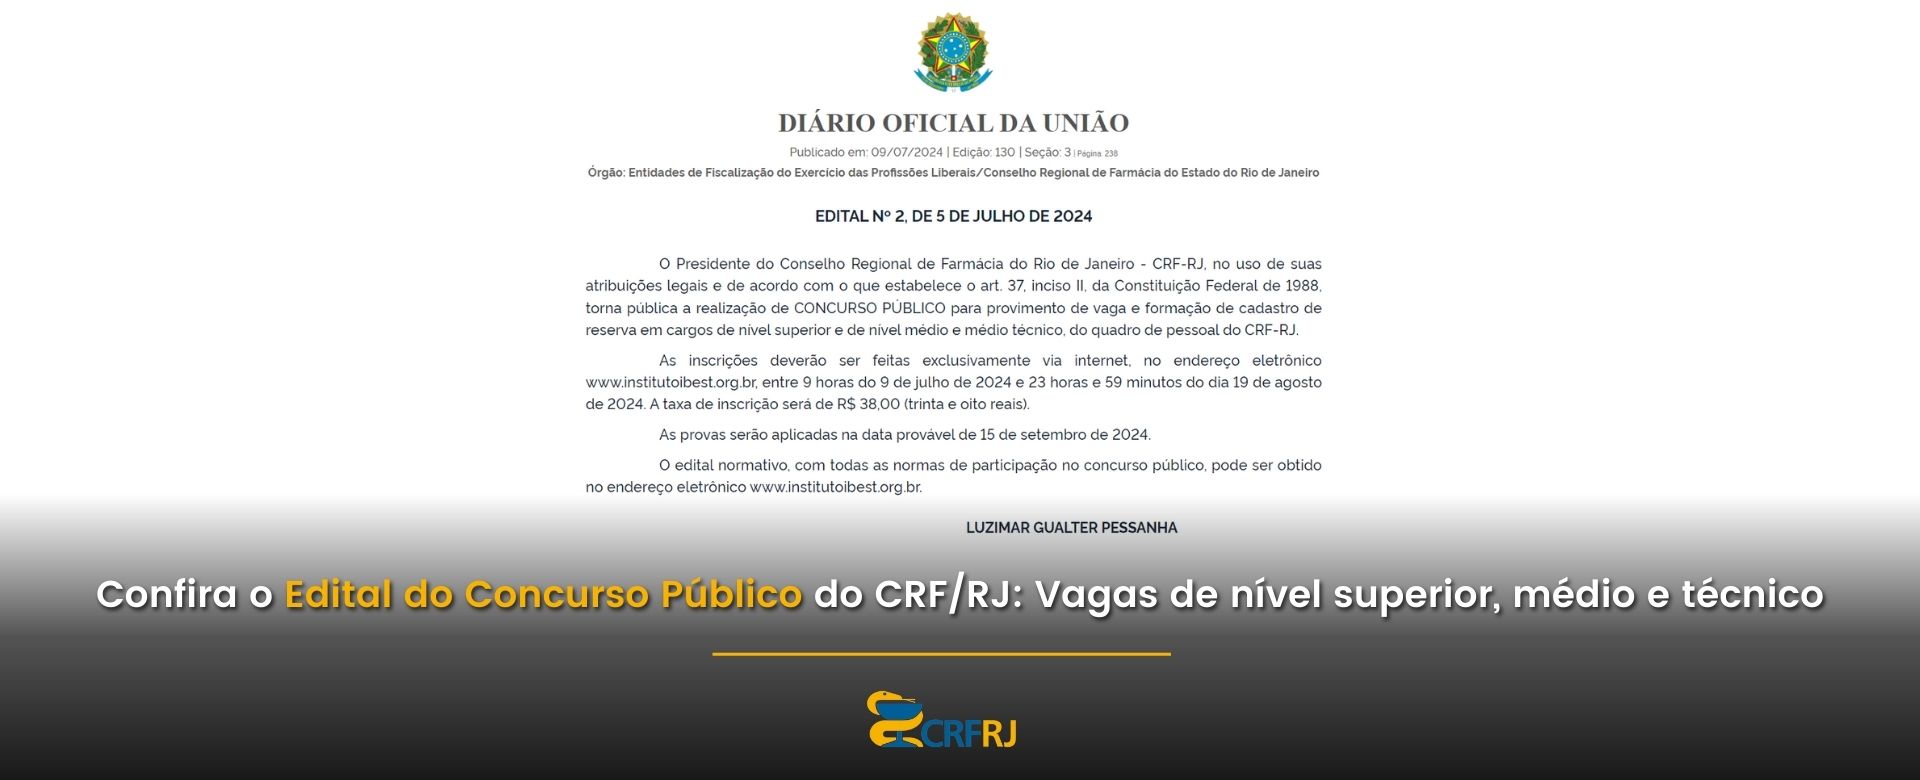 Concurso_publico_CRF_banner.jpg